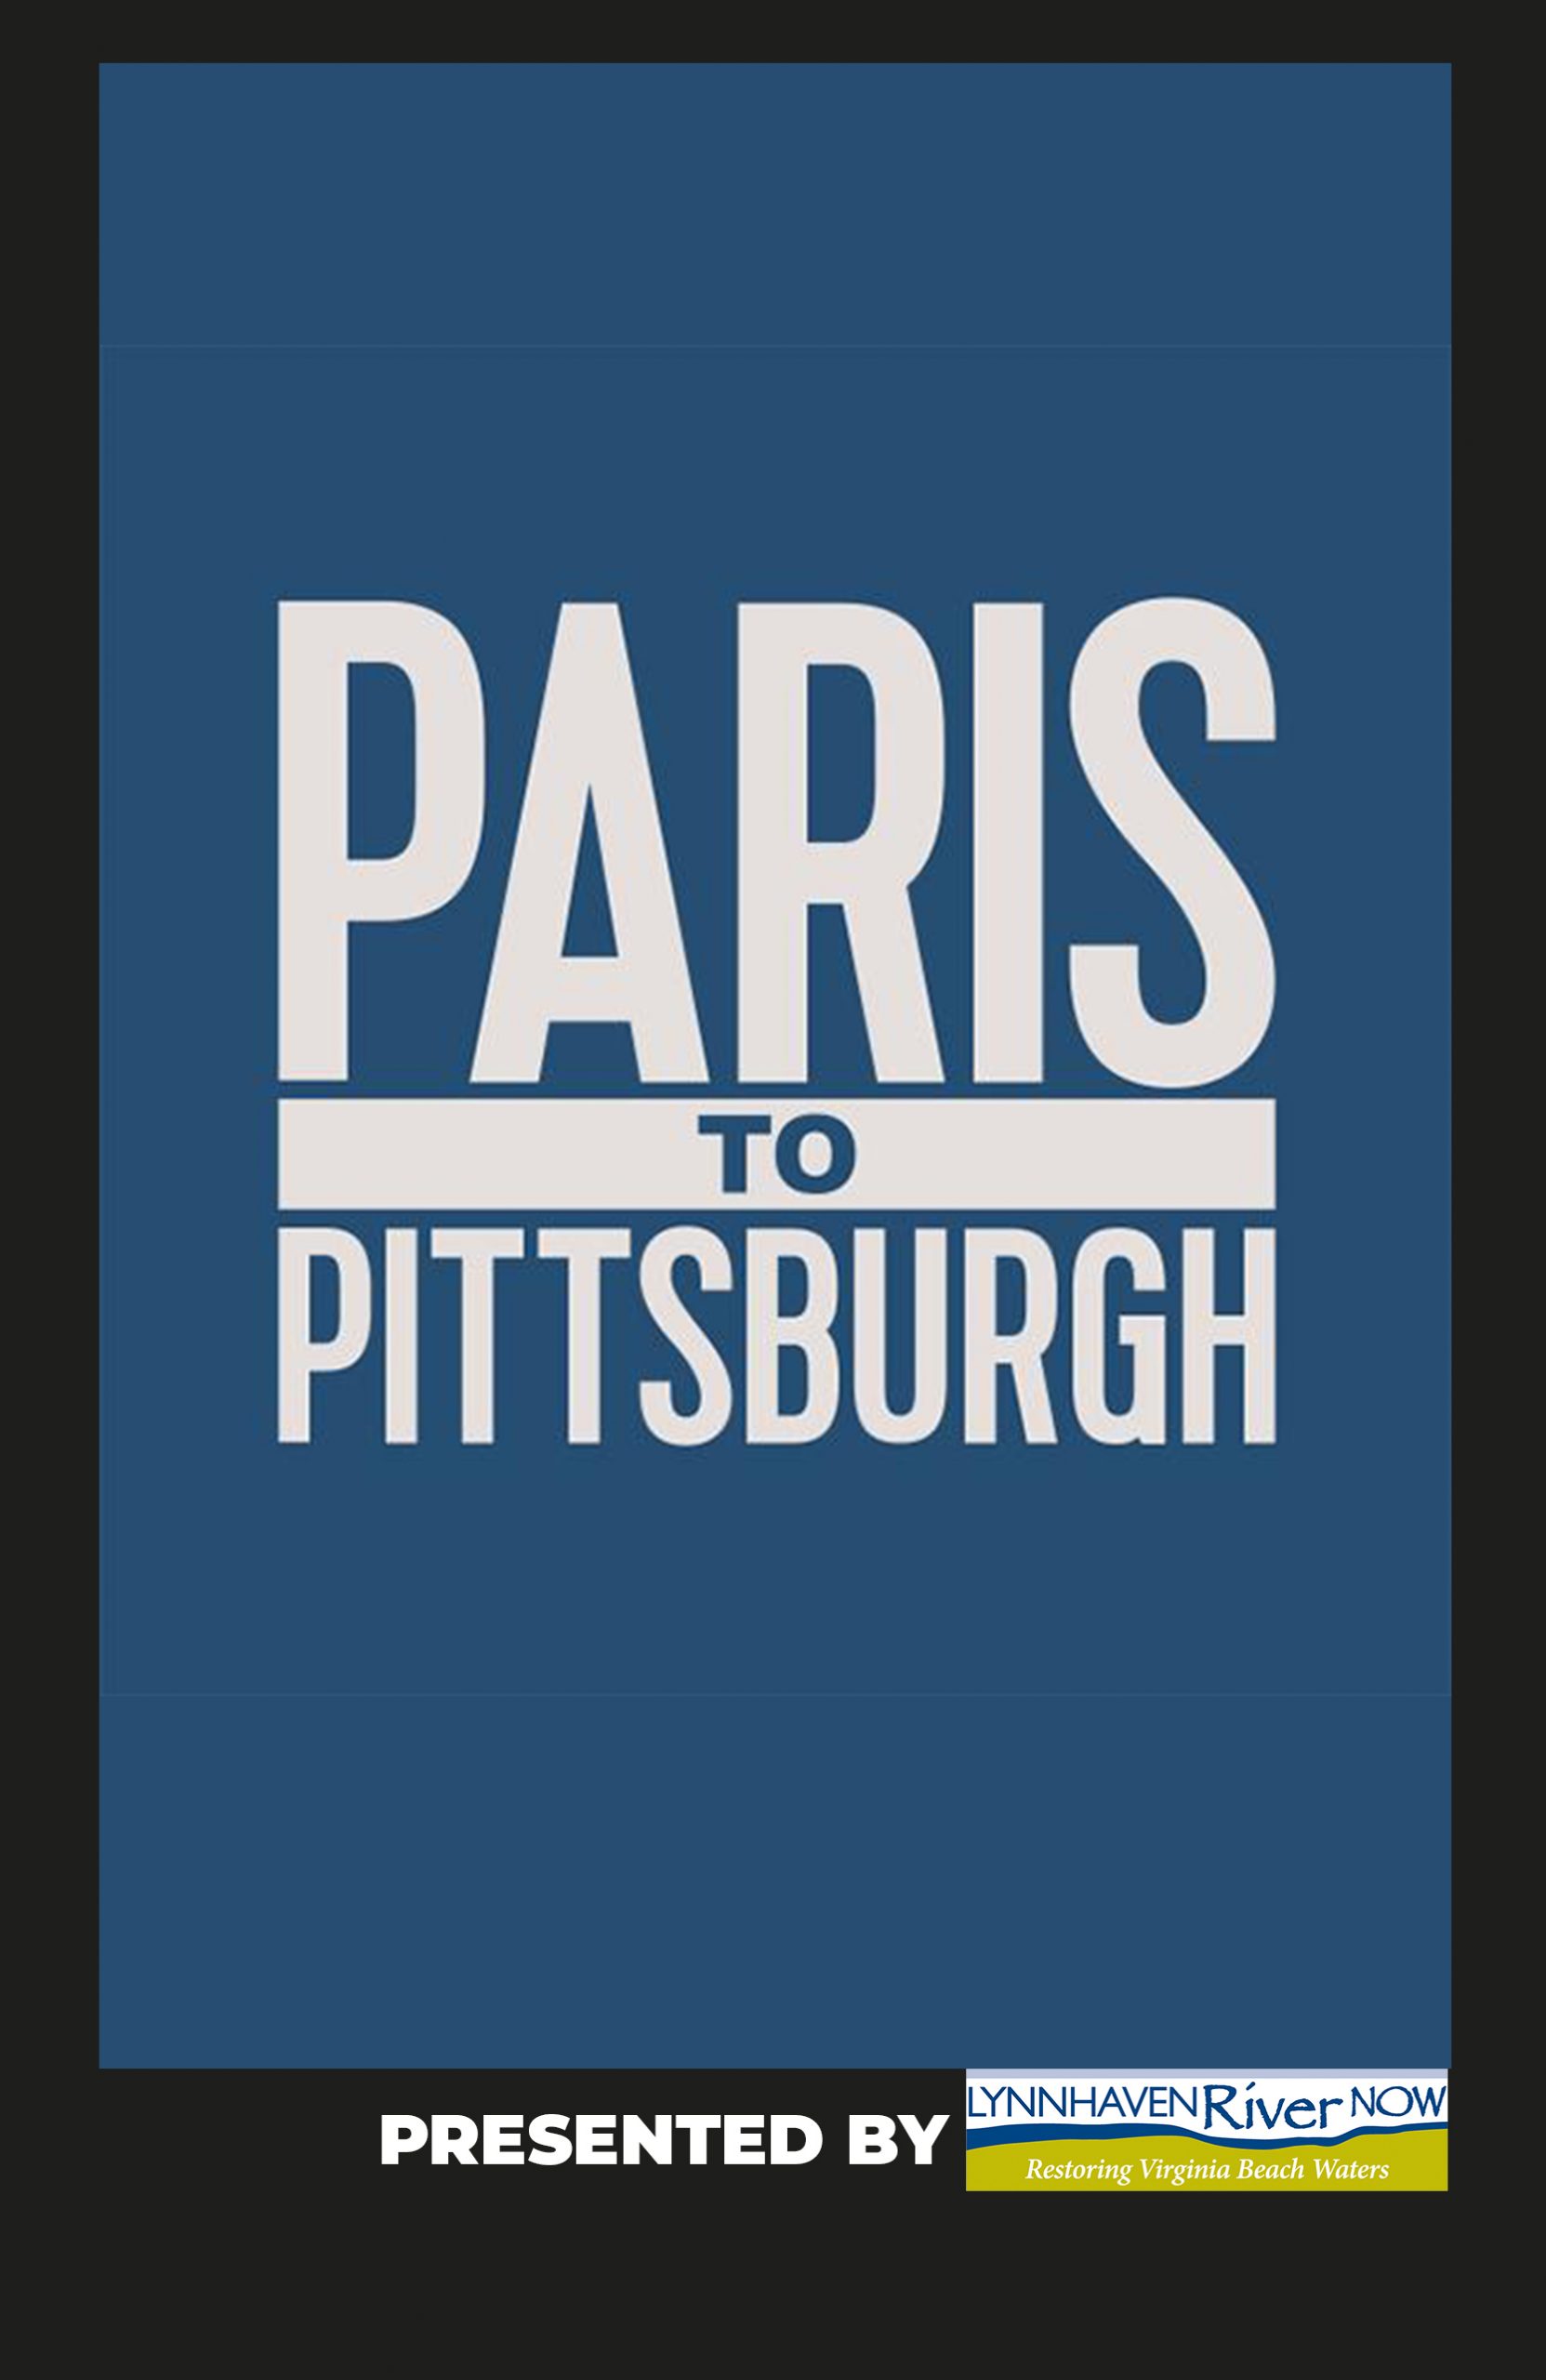 PittsburghWEB